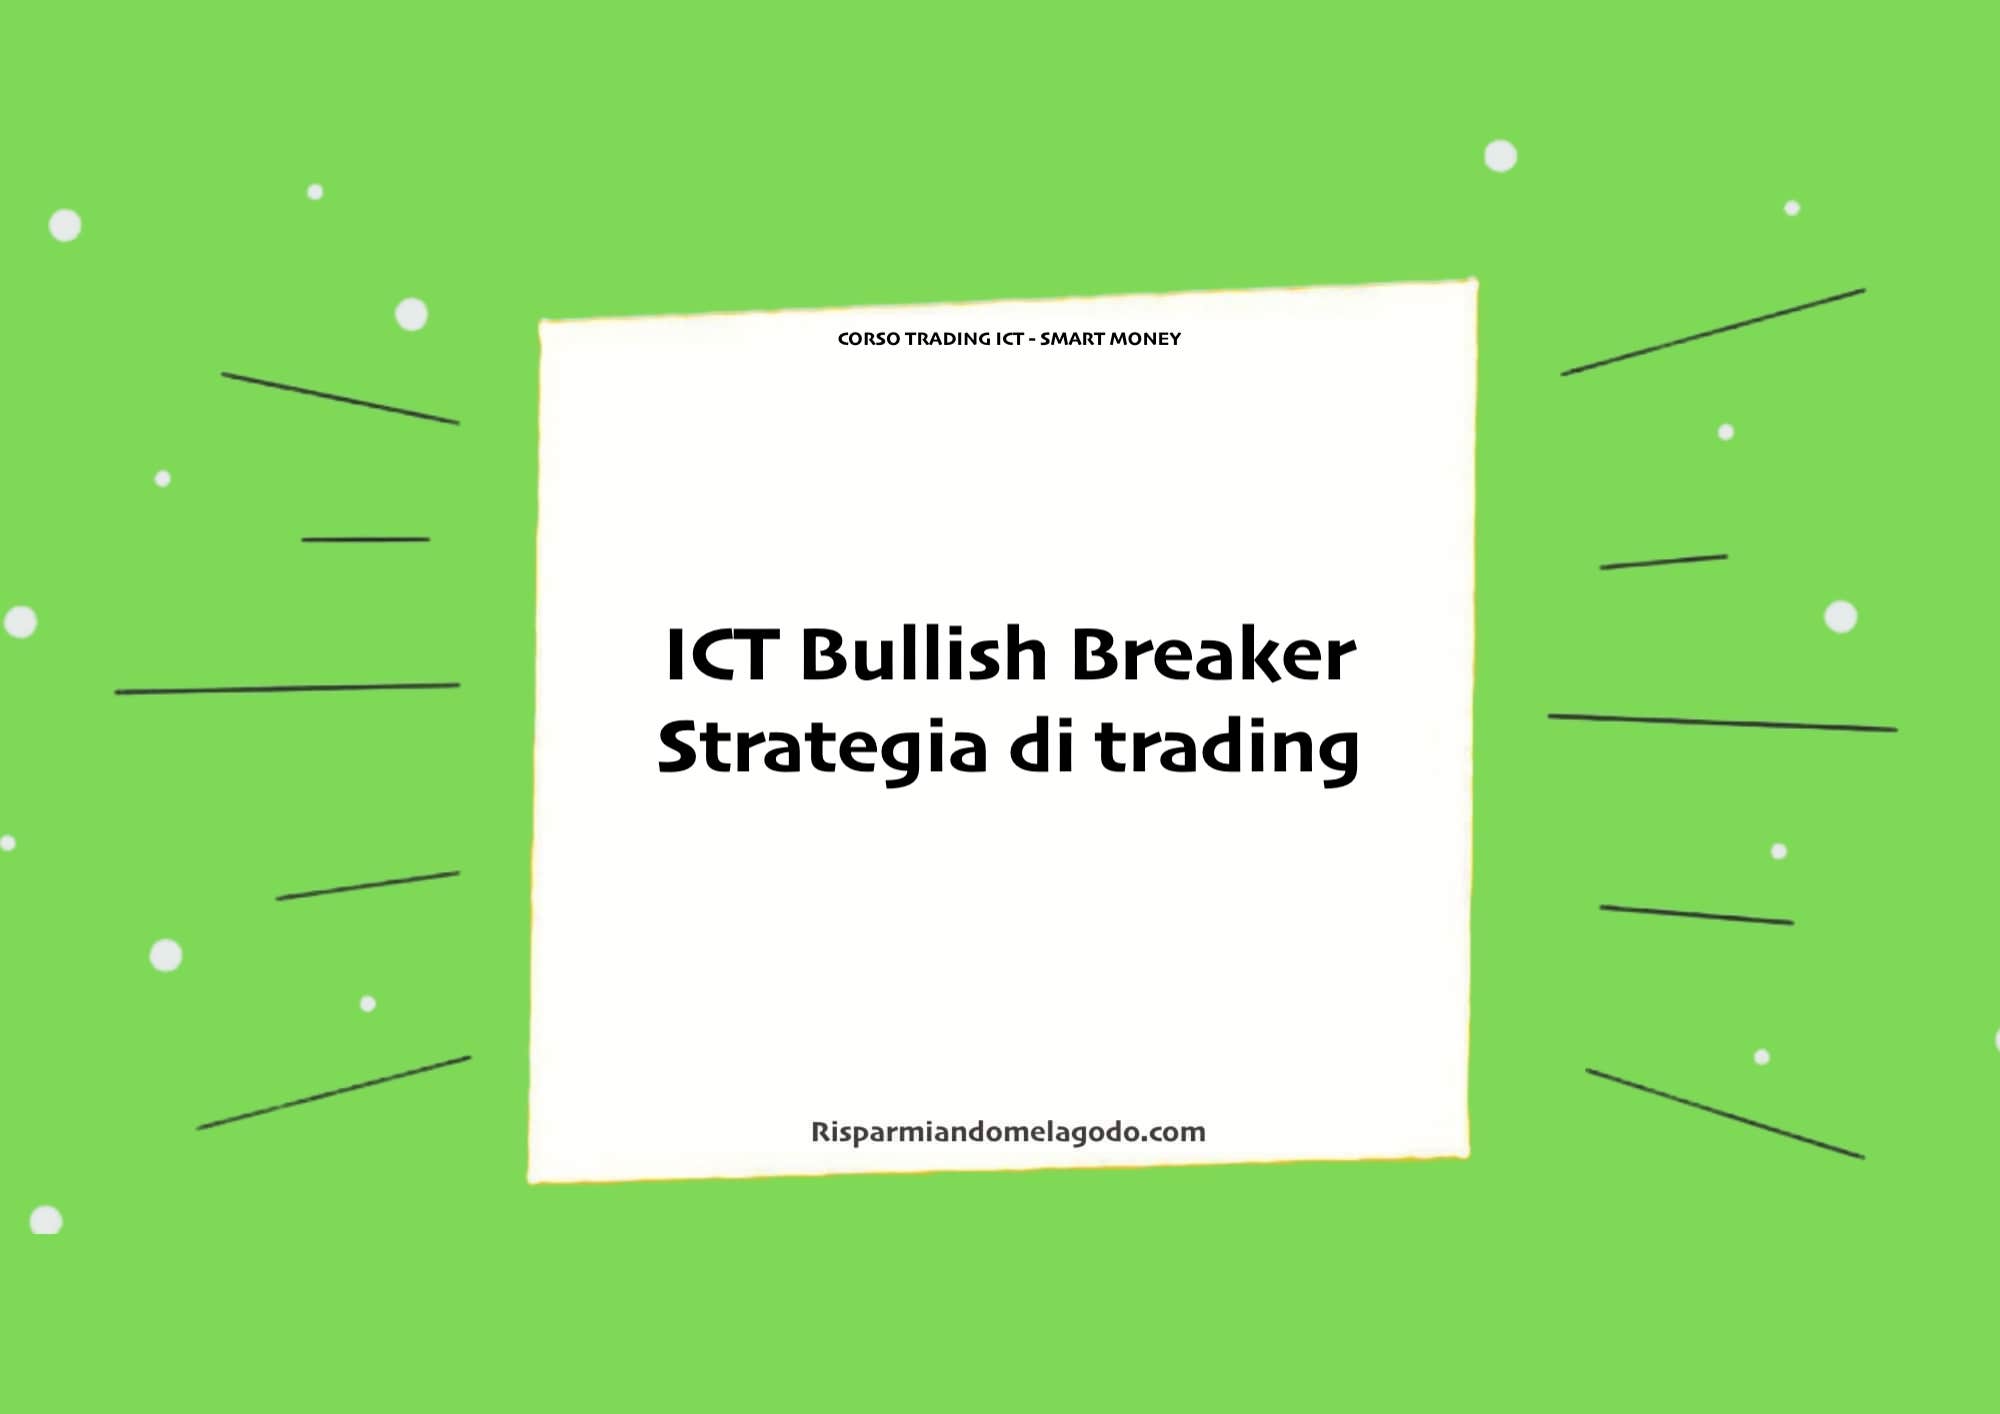 ICT Bullish Breaker Strategia di trading